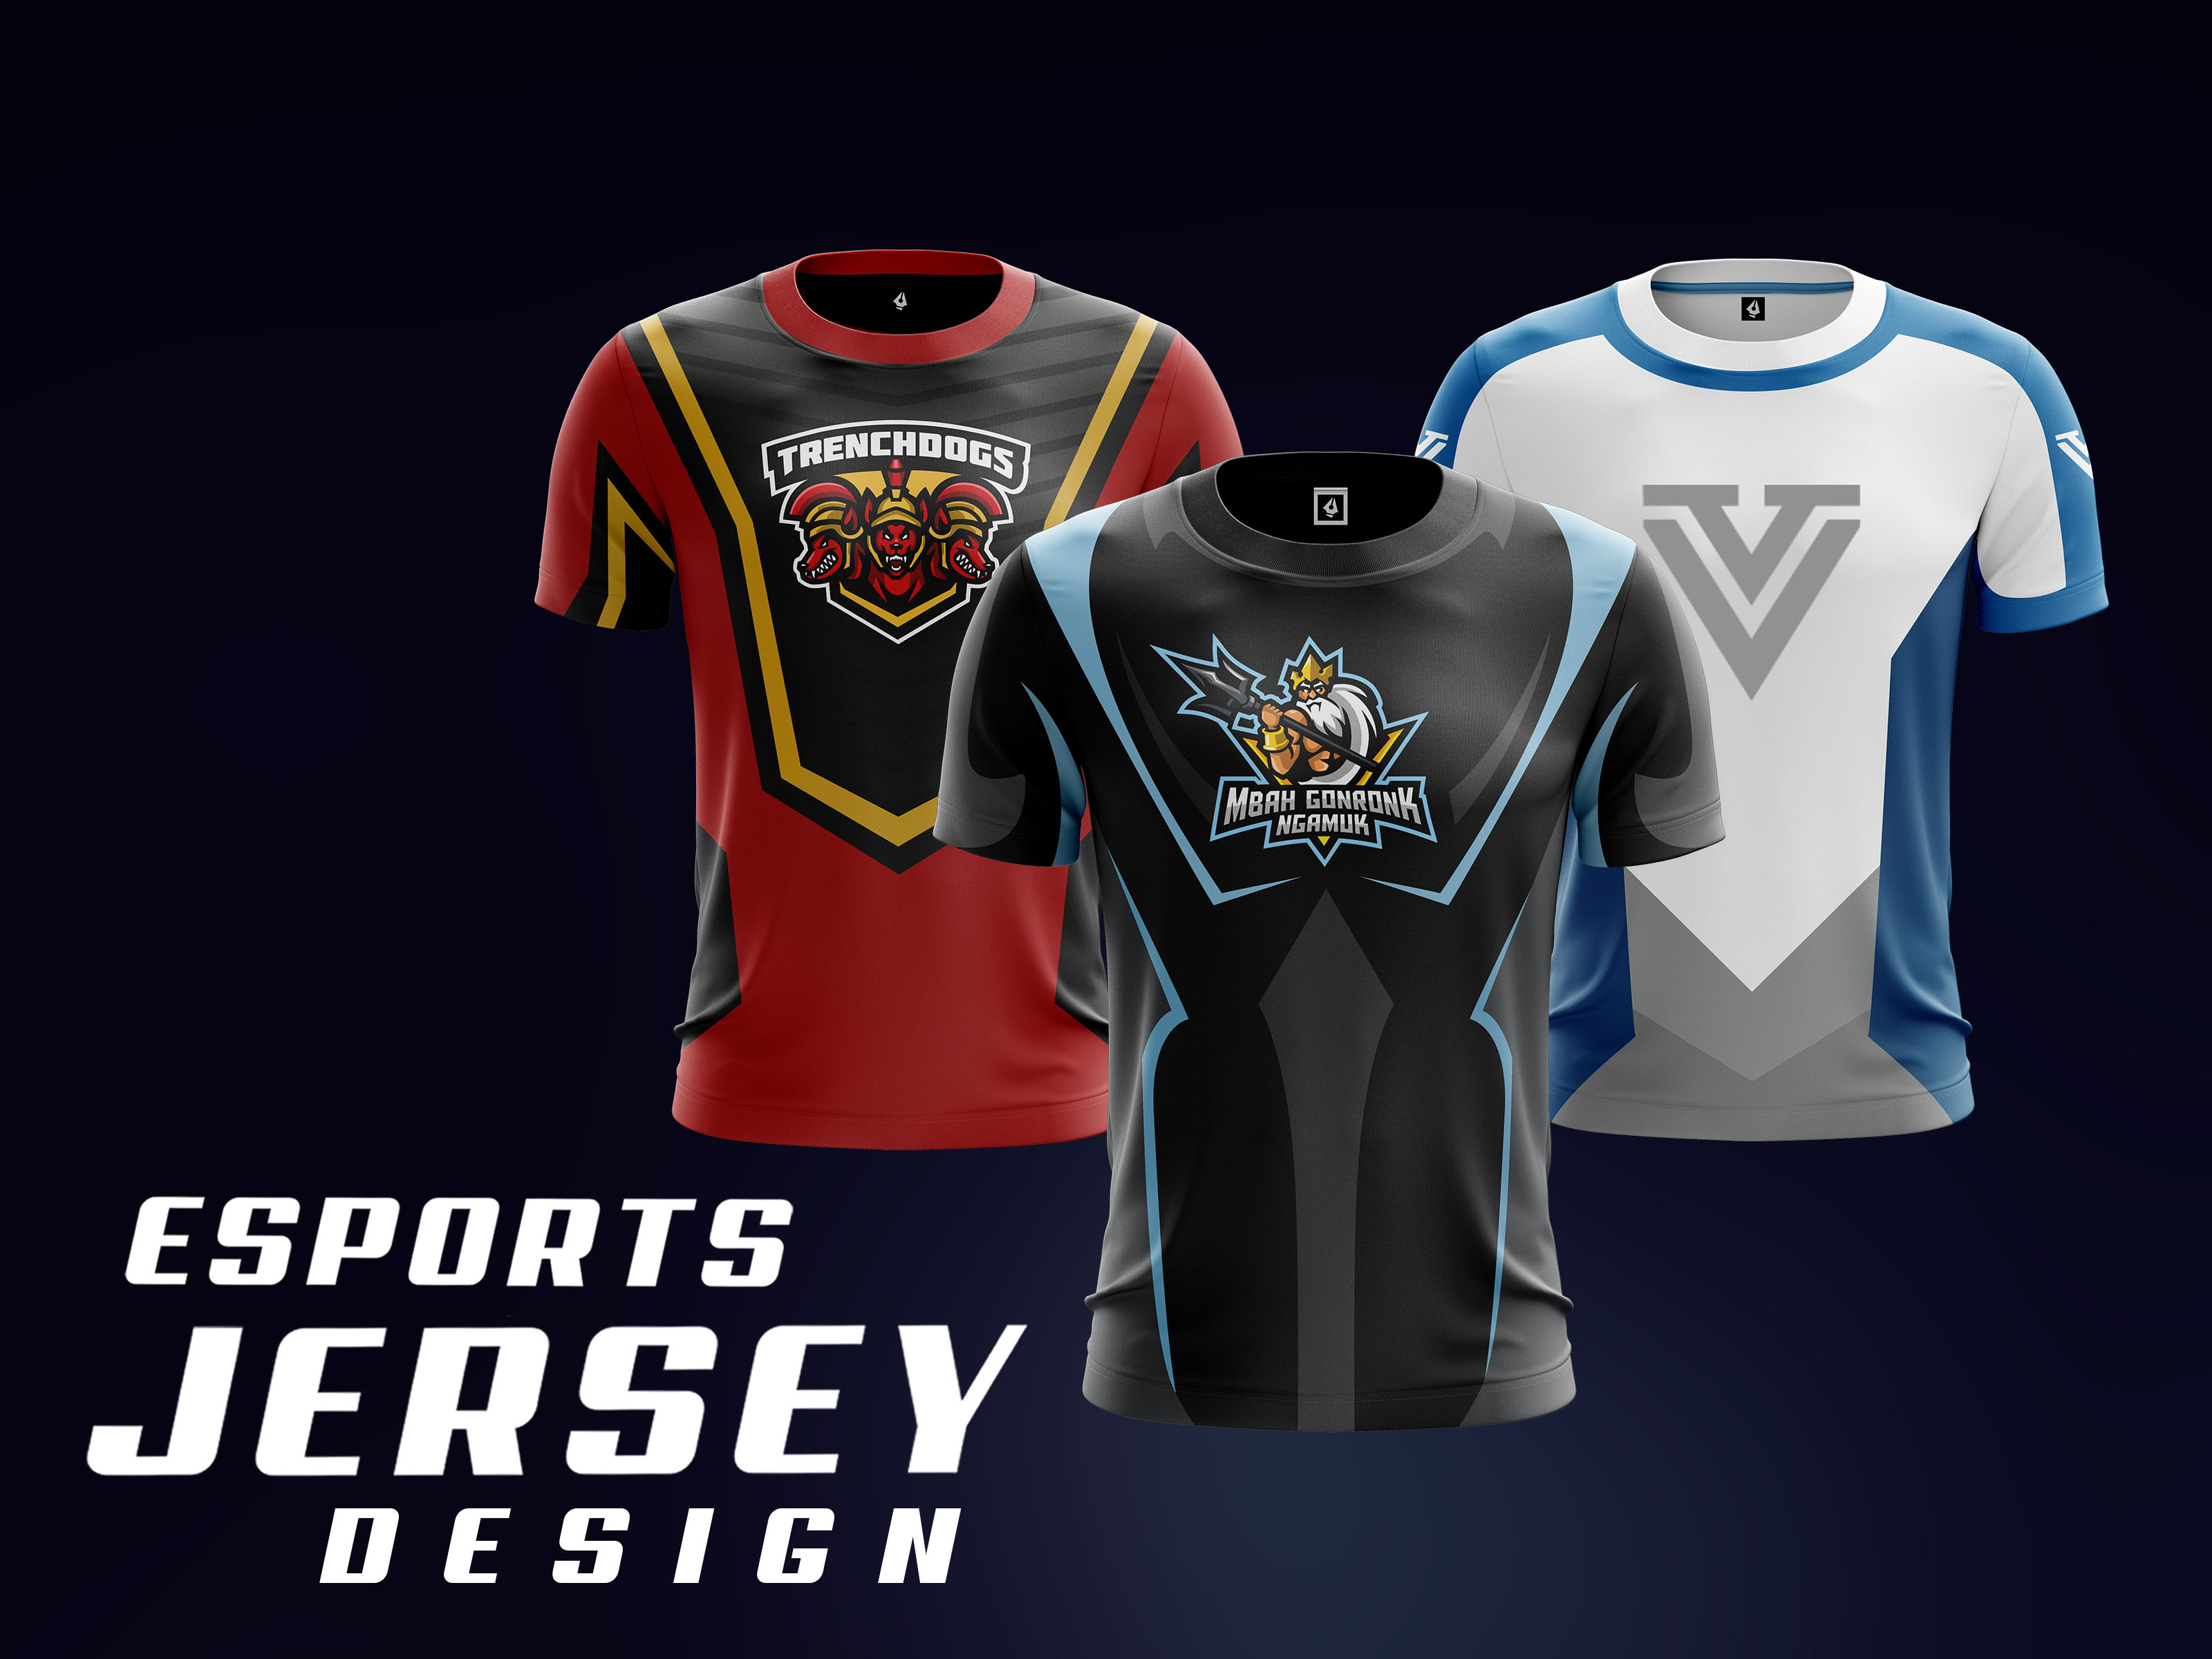 Make jersey design for sports team 